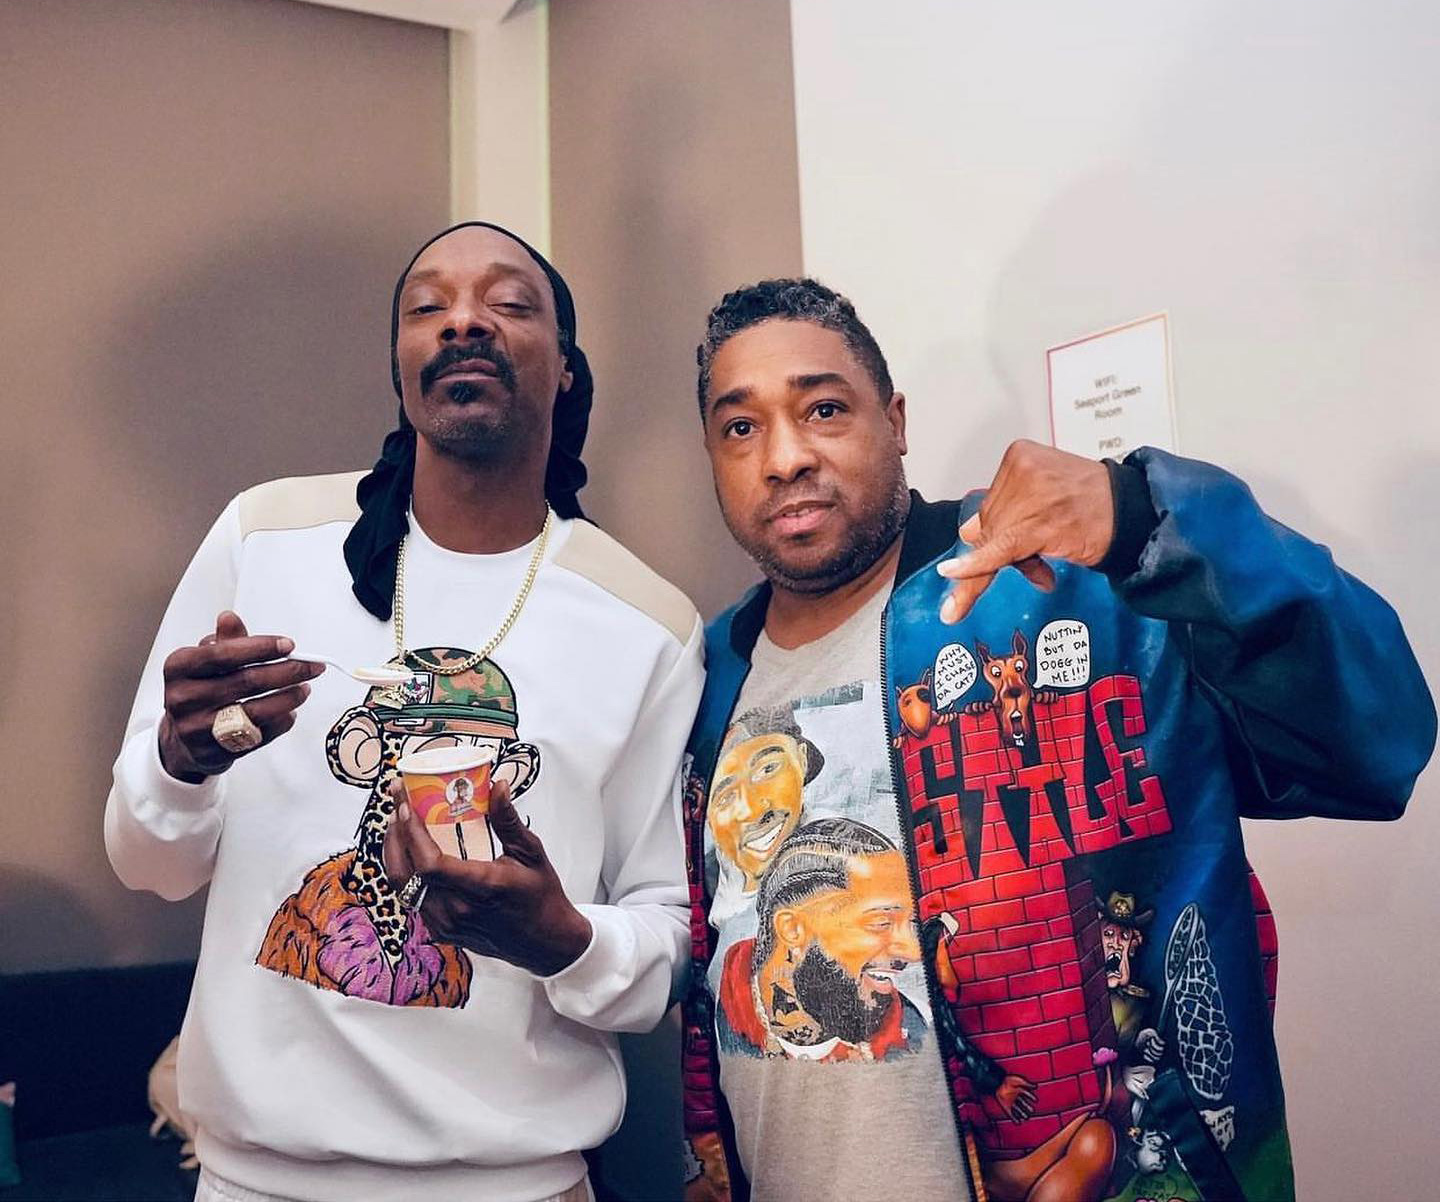 Snoop shared the tragic news on social media